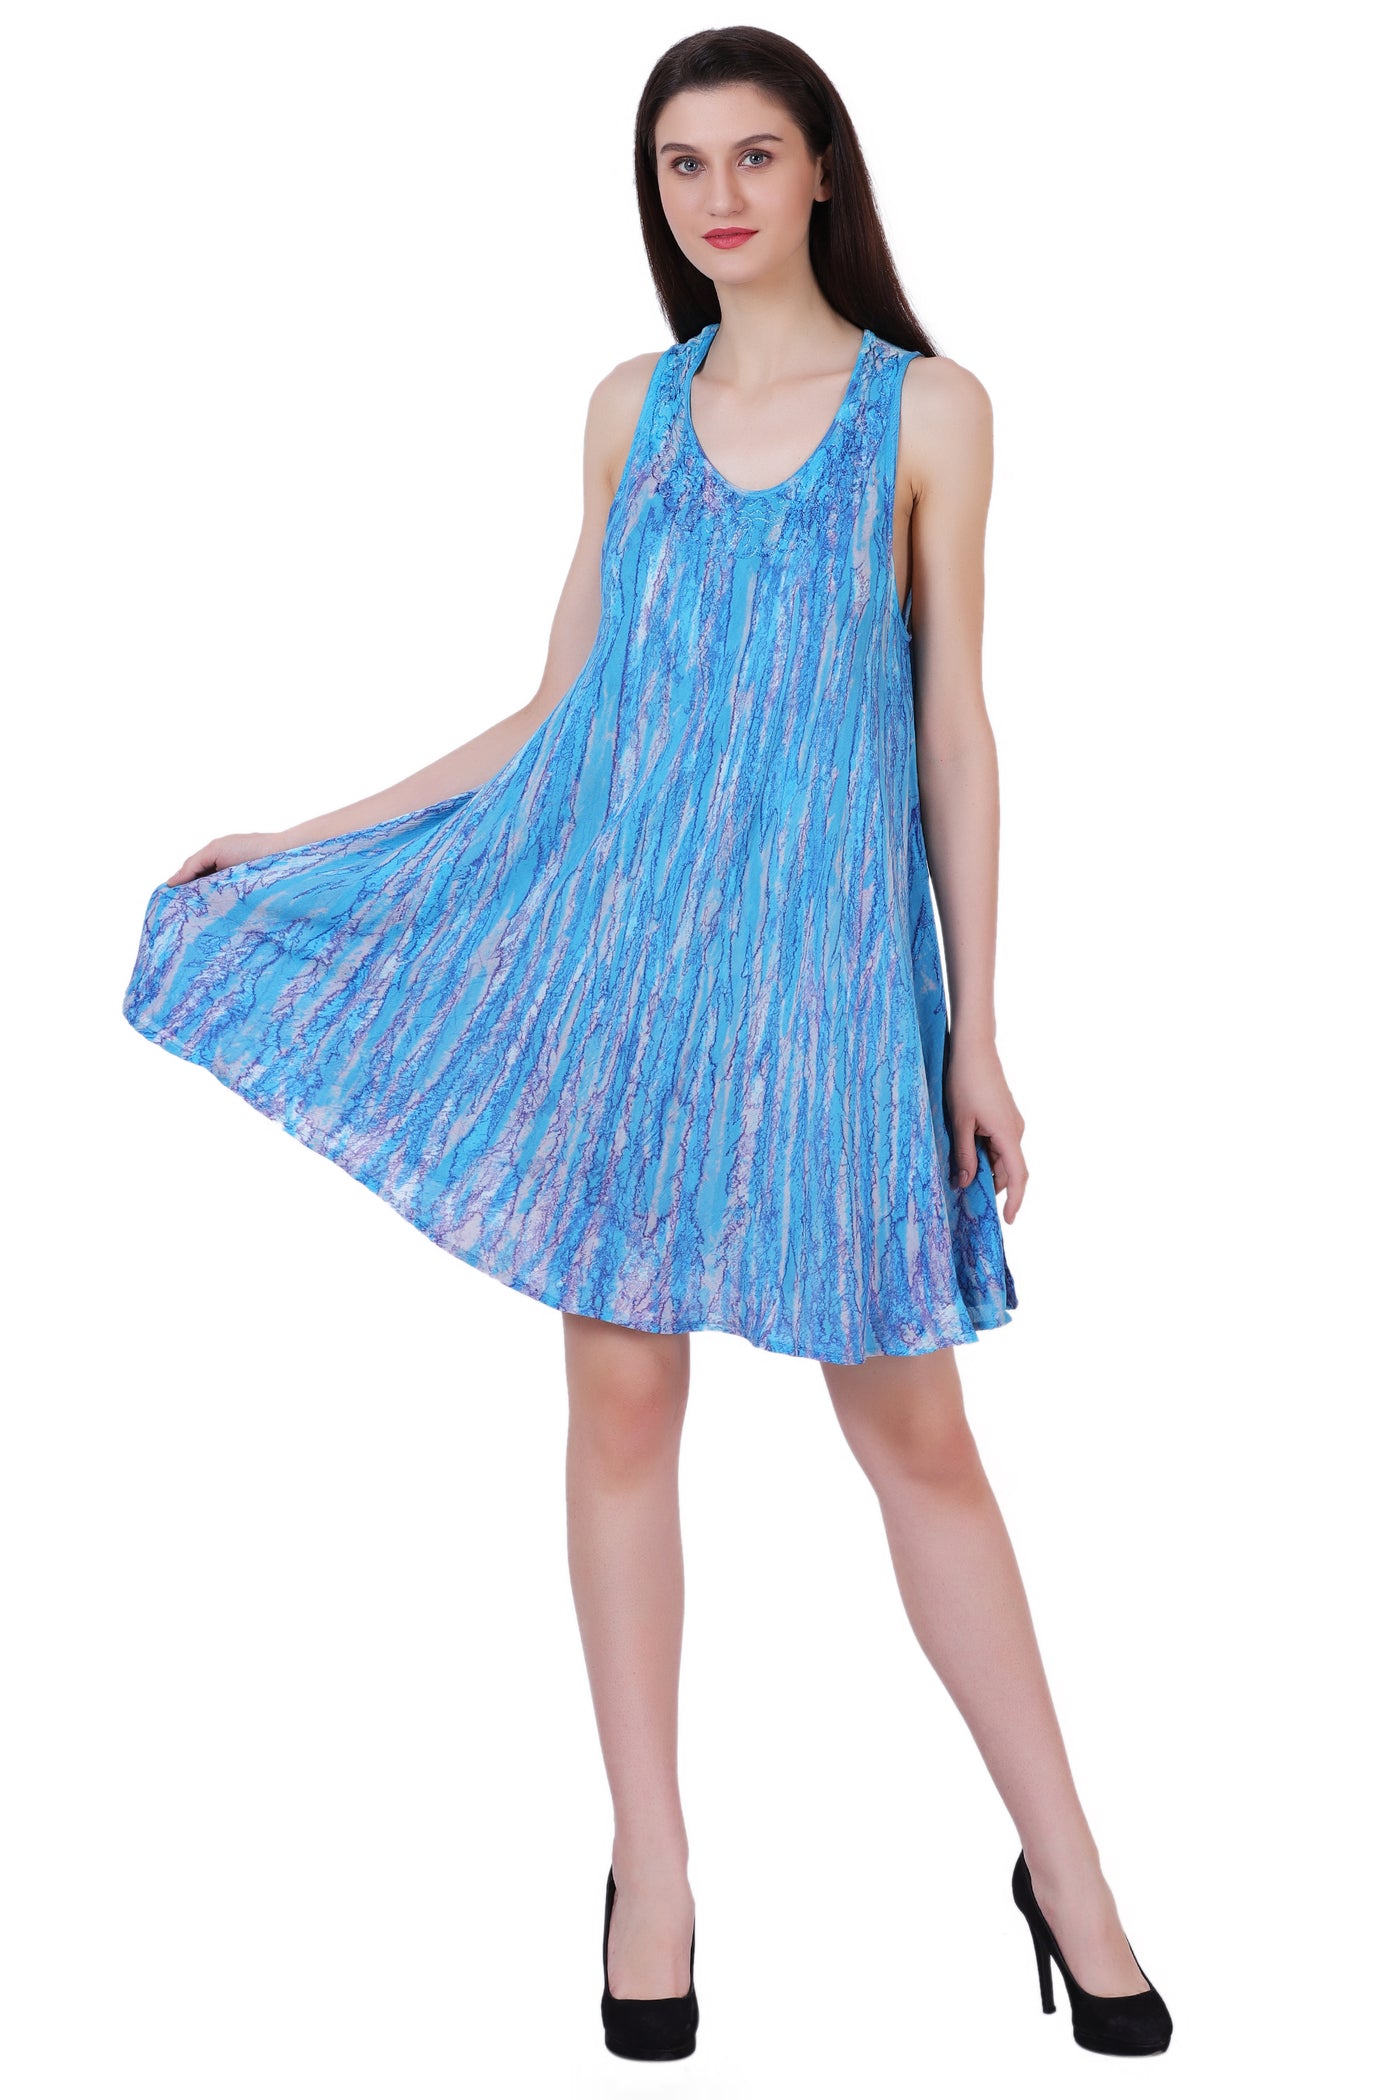 Marble Tie Dye Dress 362106 - Advance Apparels Inc